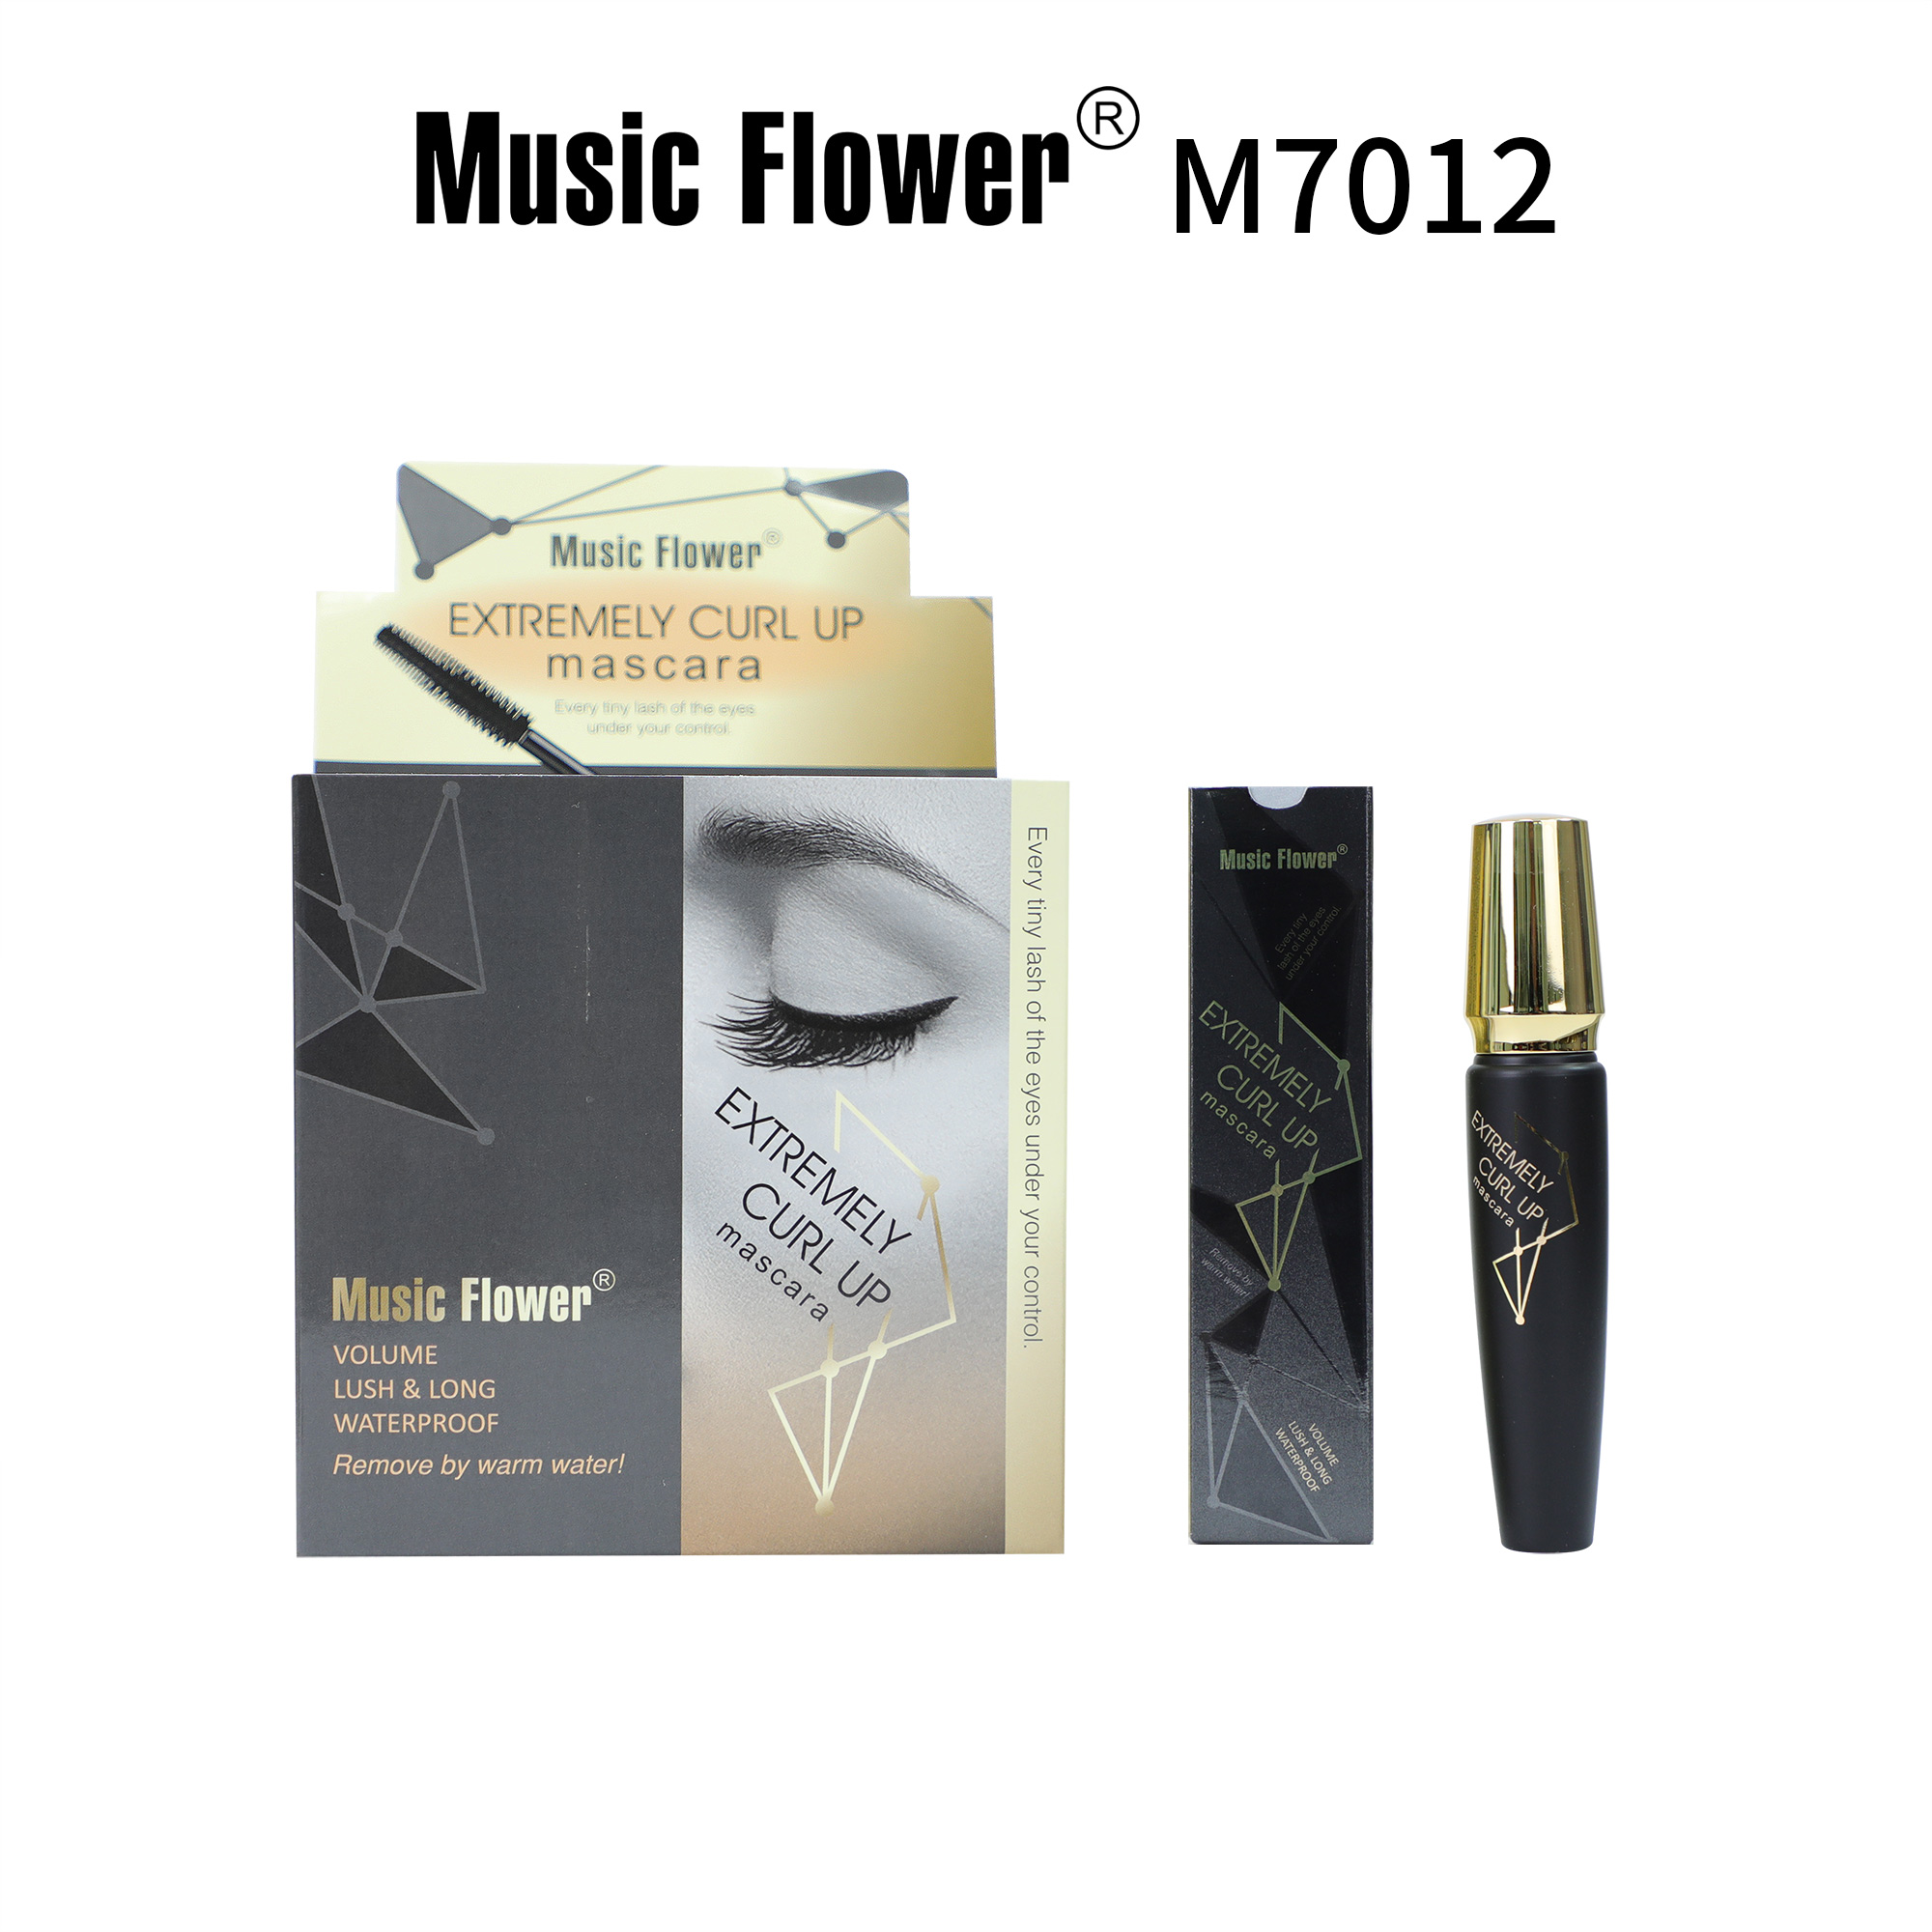 MUSIC FLOWER MASCARA M7012